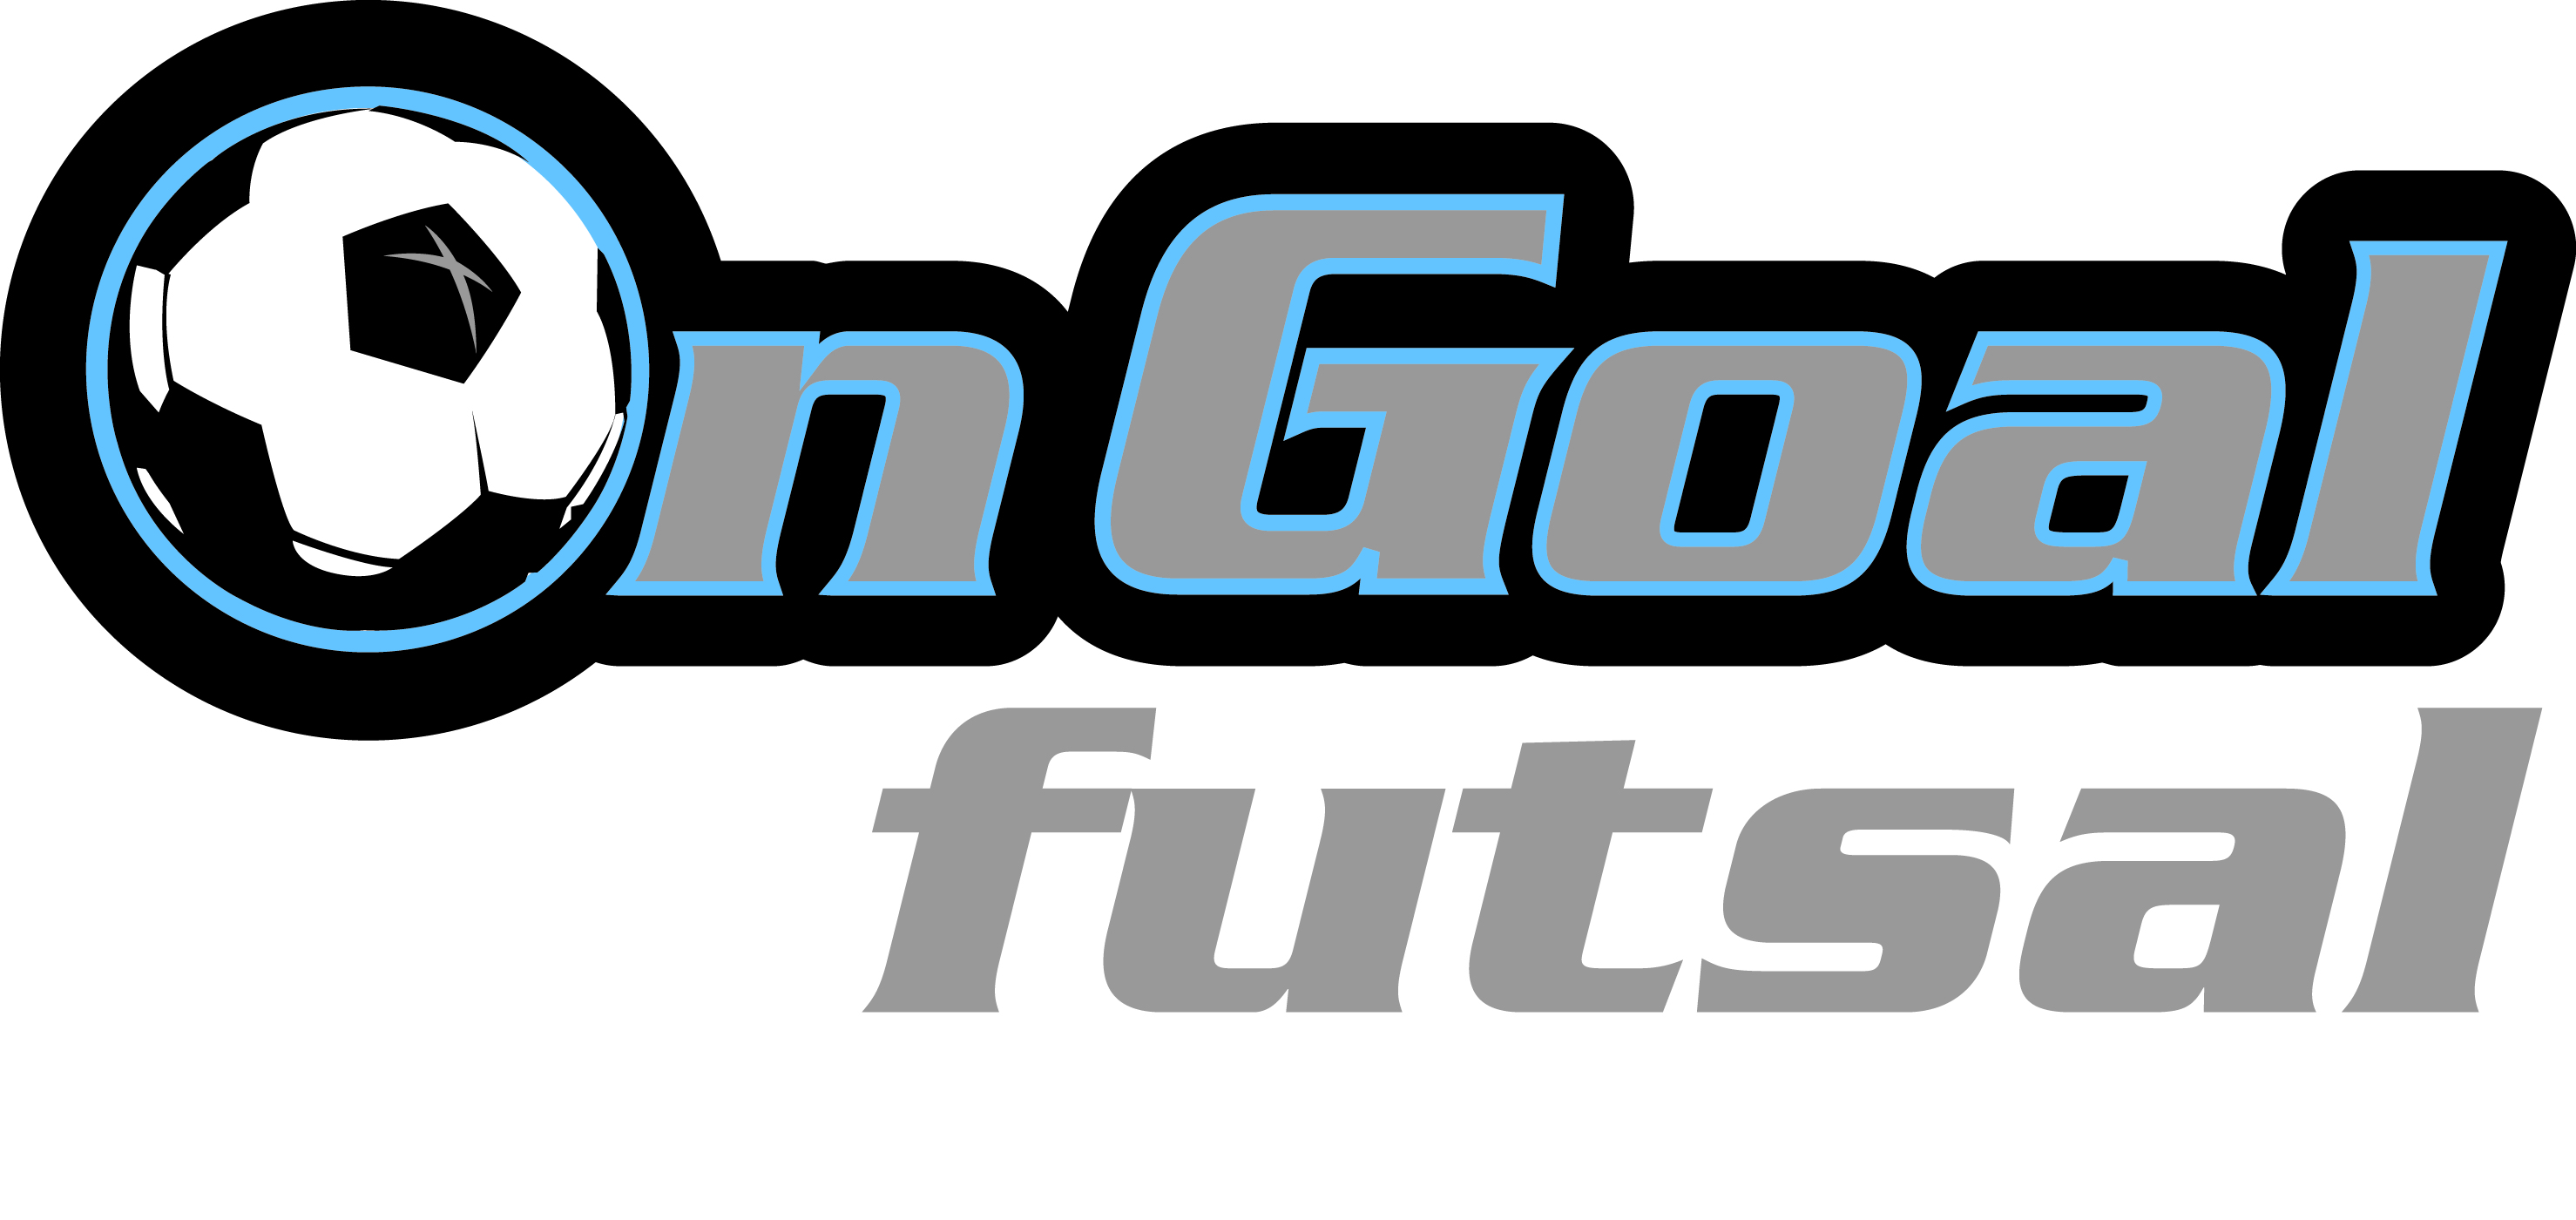 Futsal | On Goal Soccer